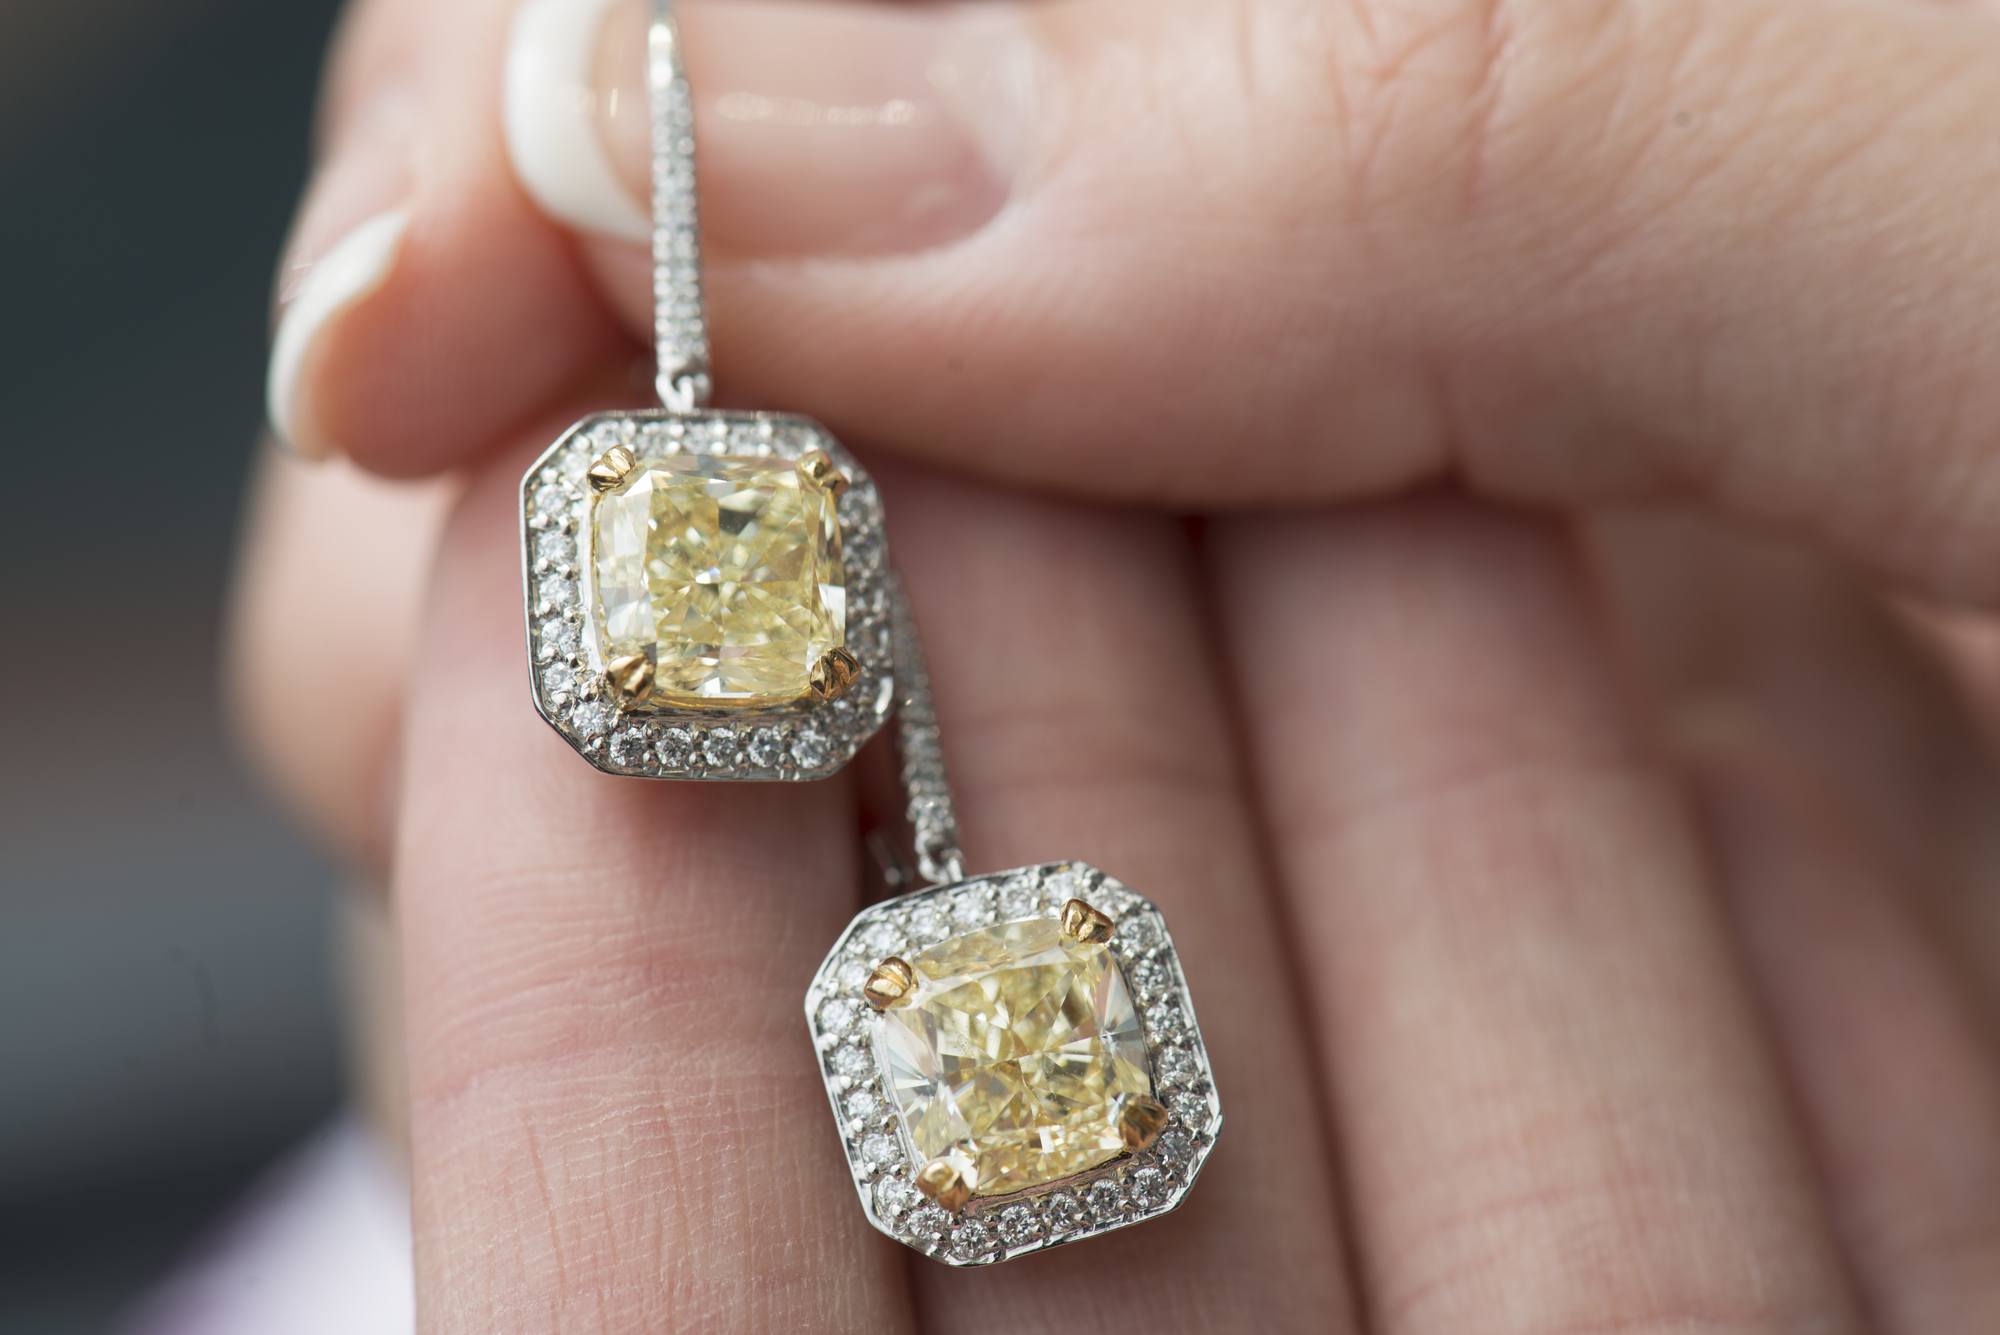 Coloured Diamond earrings at Diamond Registry Hong Kong